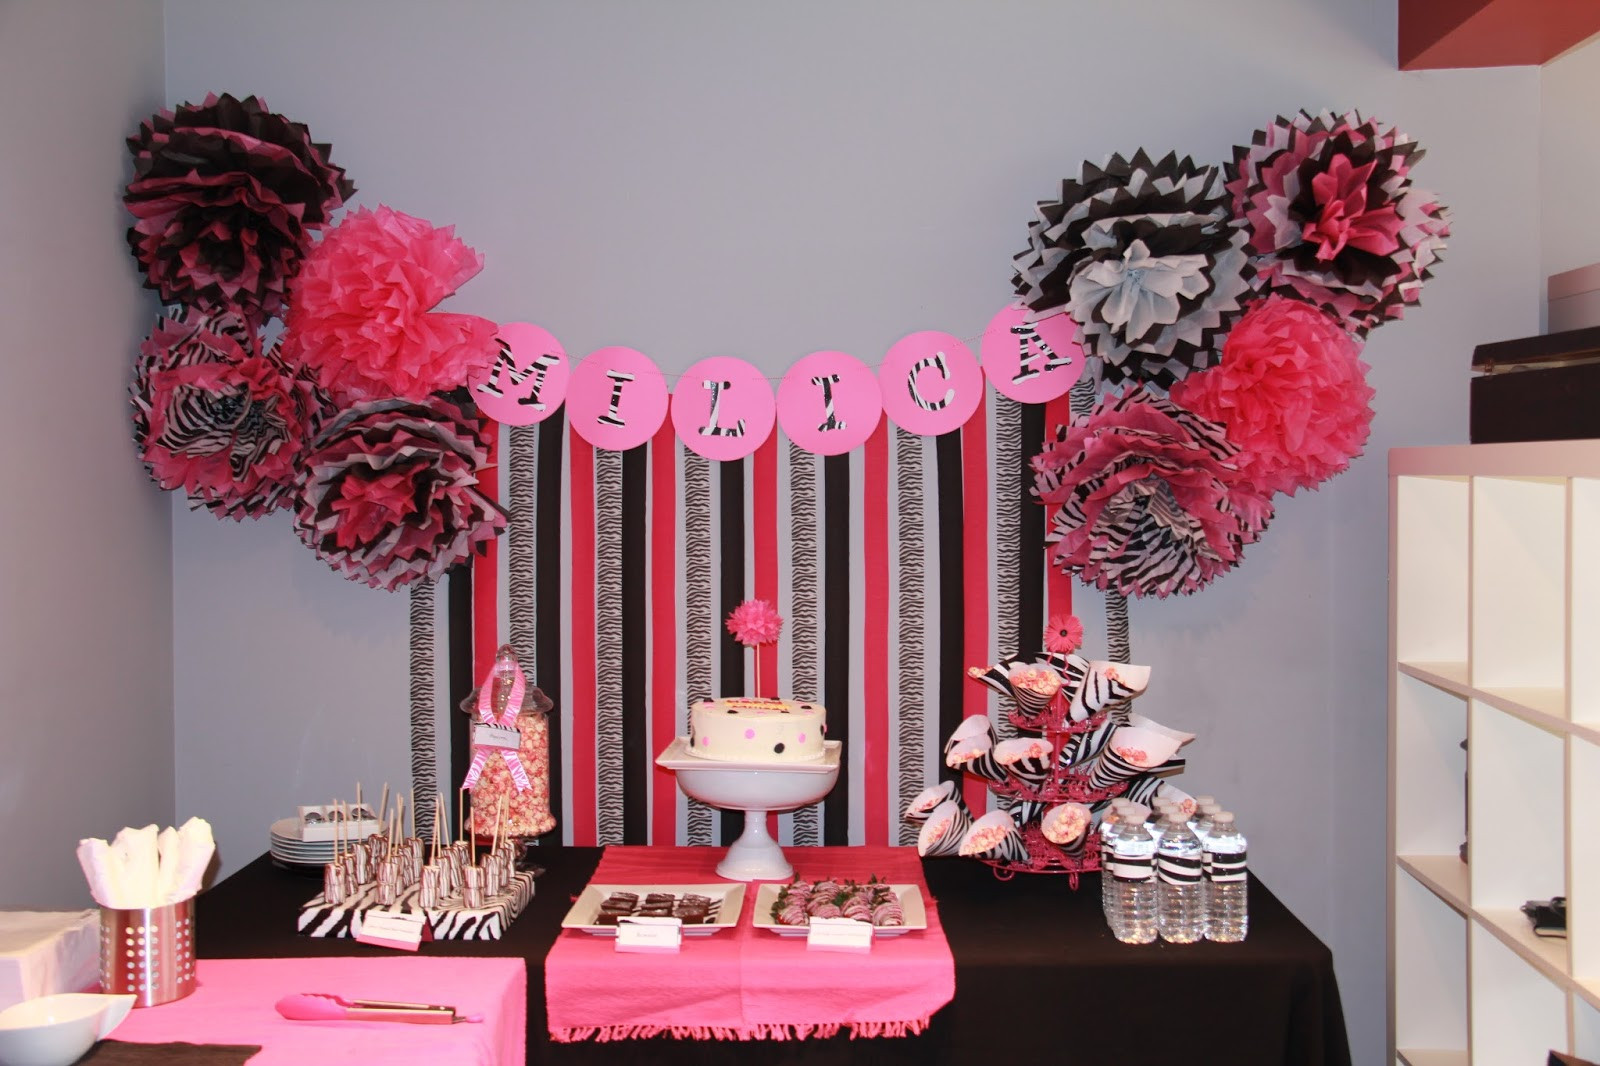 Zebra Print And Pink Birthday Party Ideas
 THREElittleBIRDS Hot Pink and Zebra Print Party